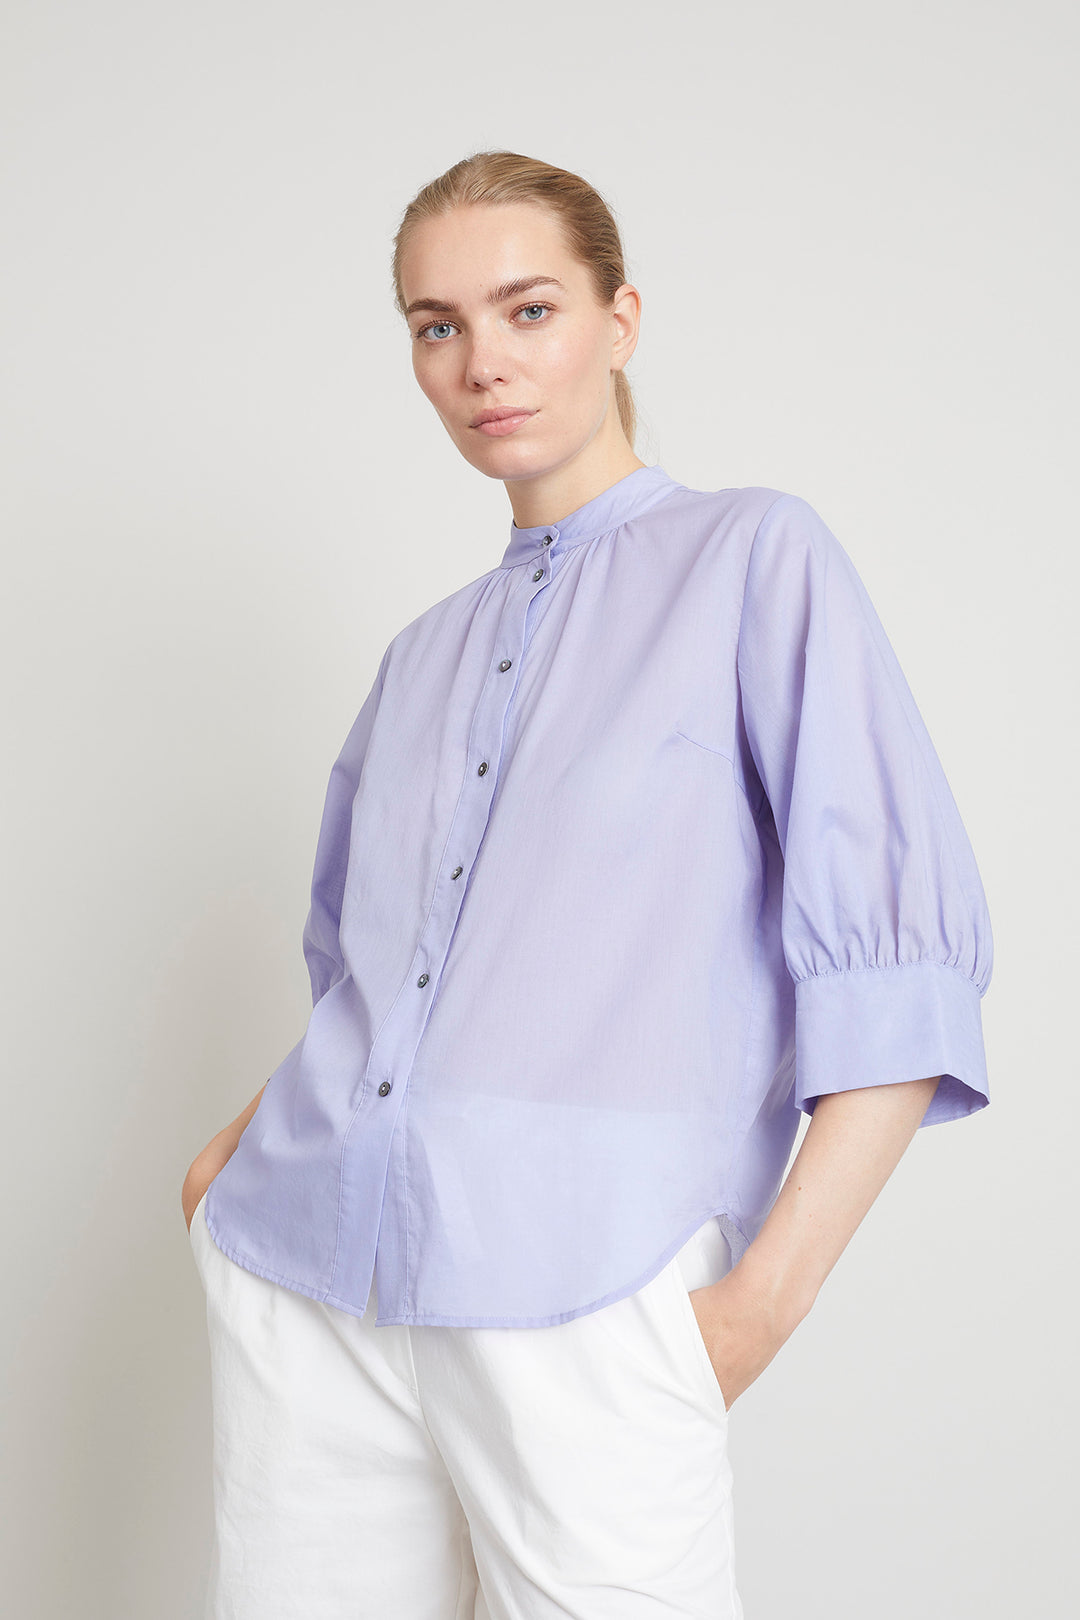 Heartmade Gionna skjorte SHIRTS 231 Blue lavender